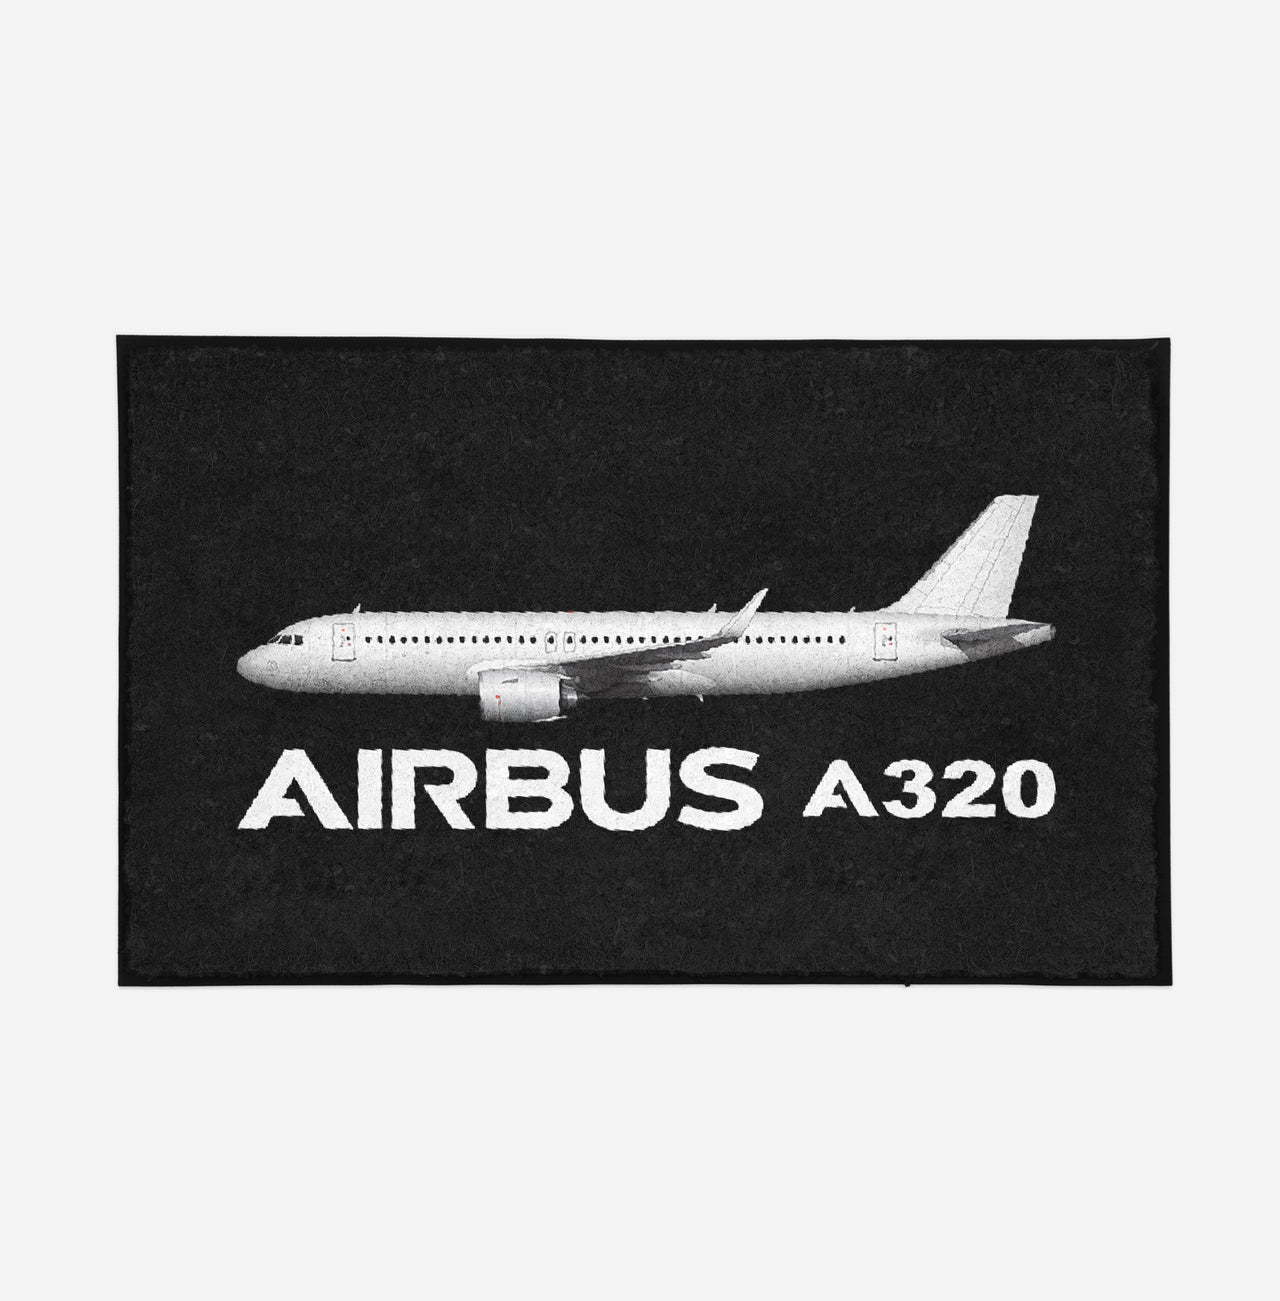 The Airbus A320 Designed Door Mats